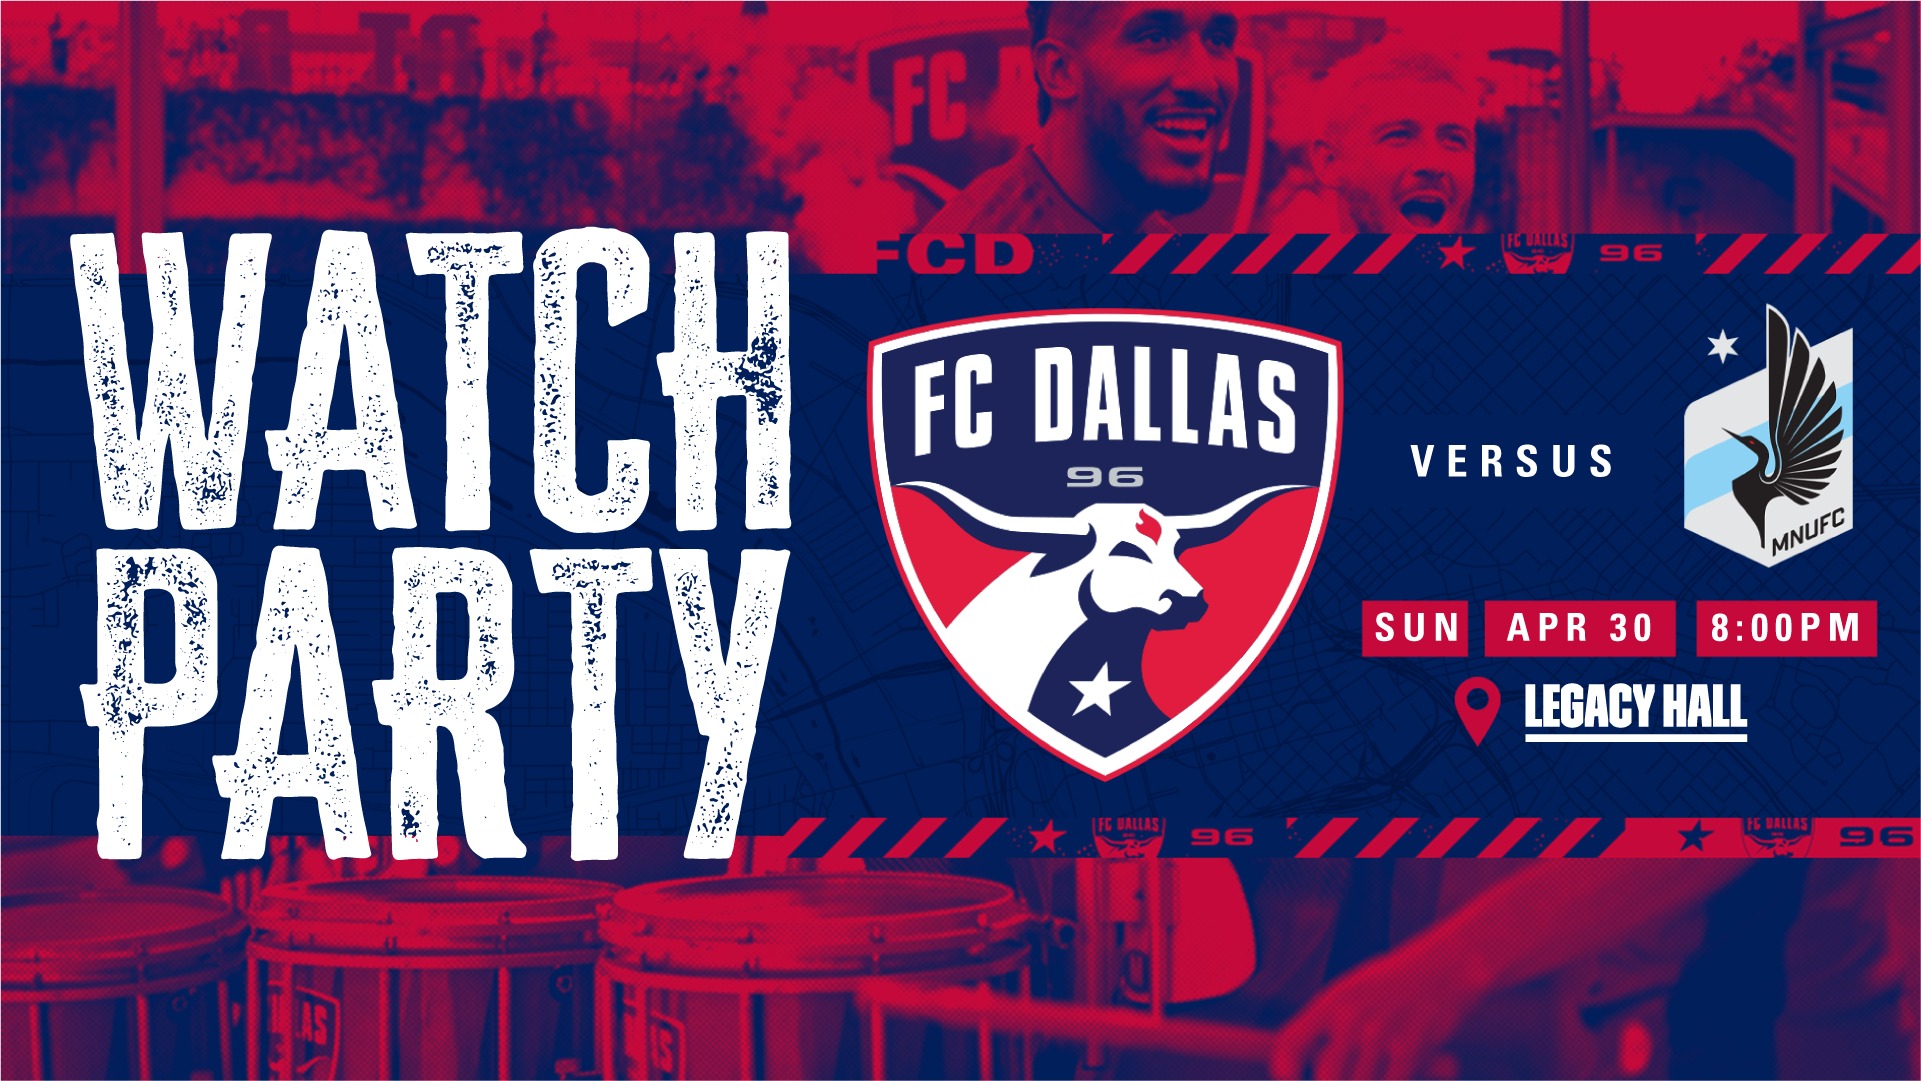 FC Dallas VS Minnesota Watch Party